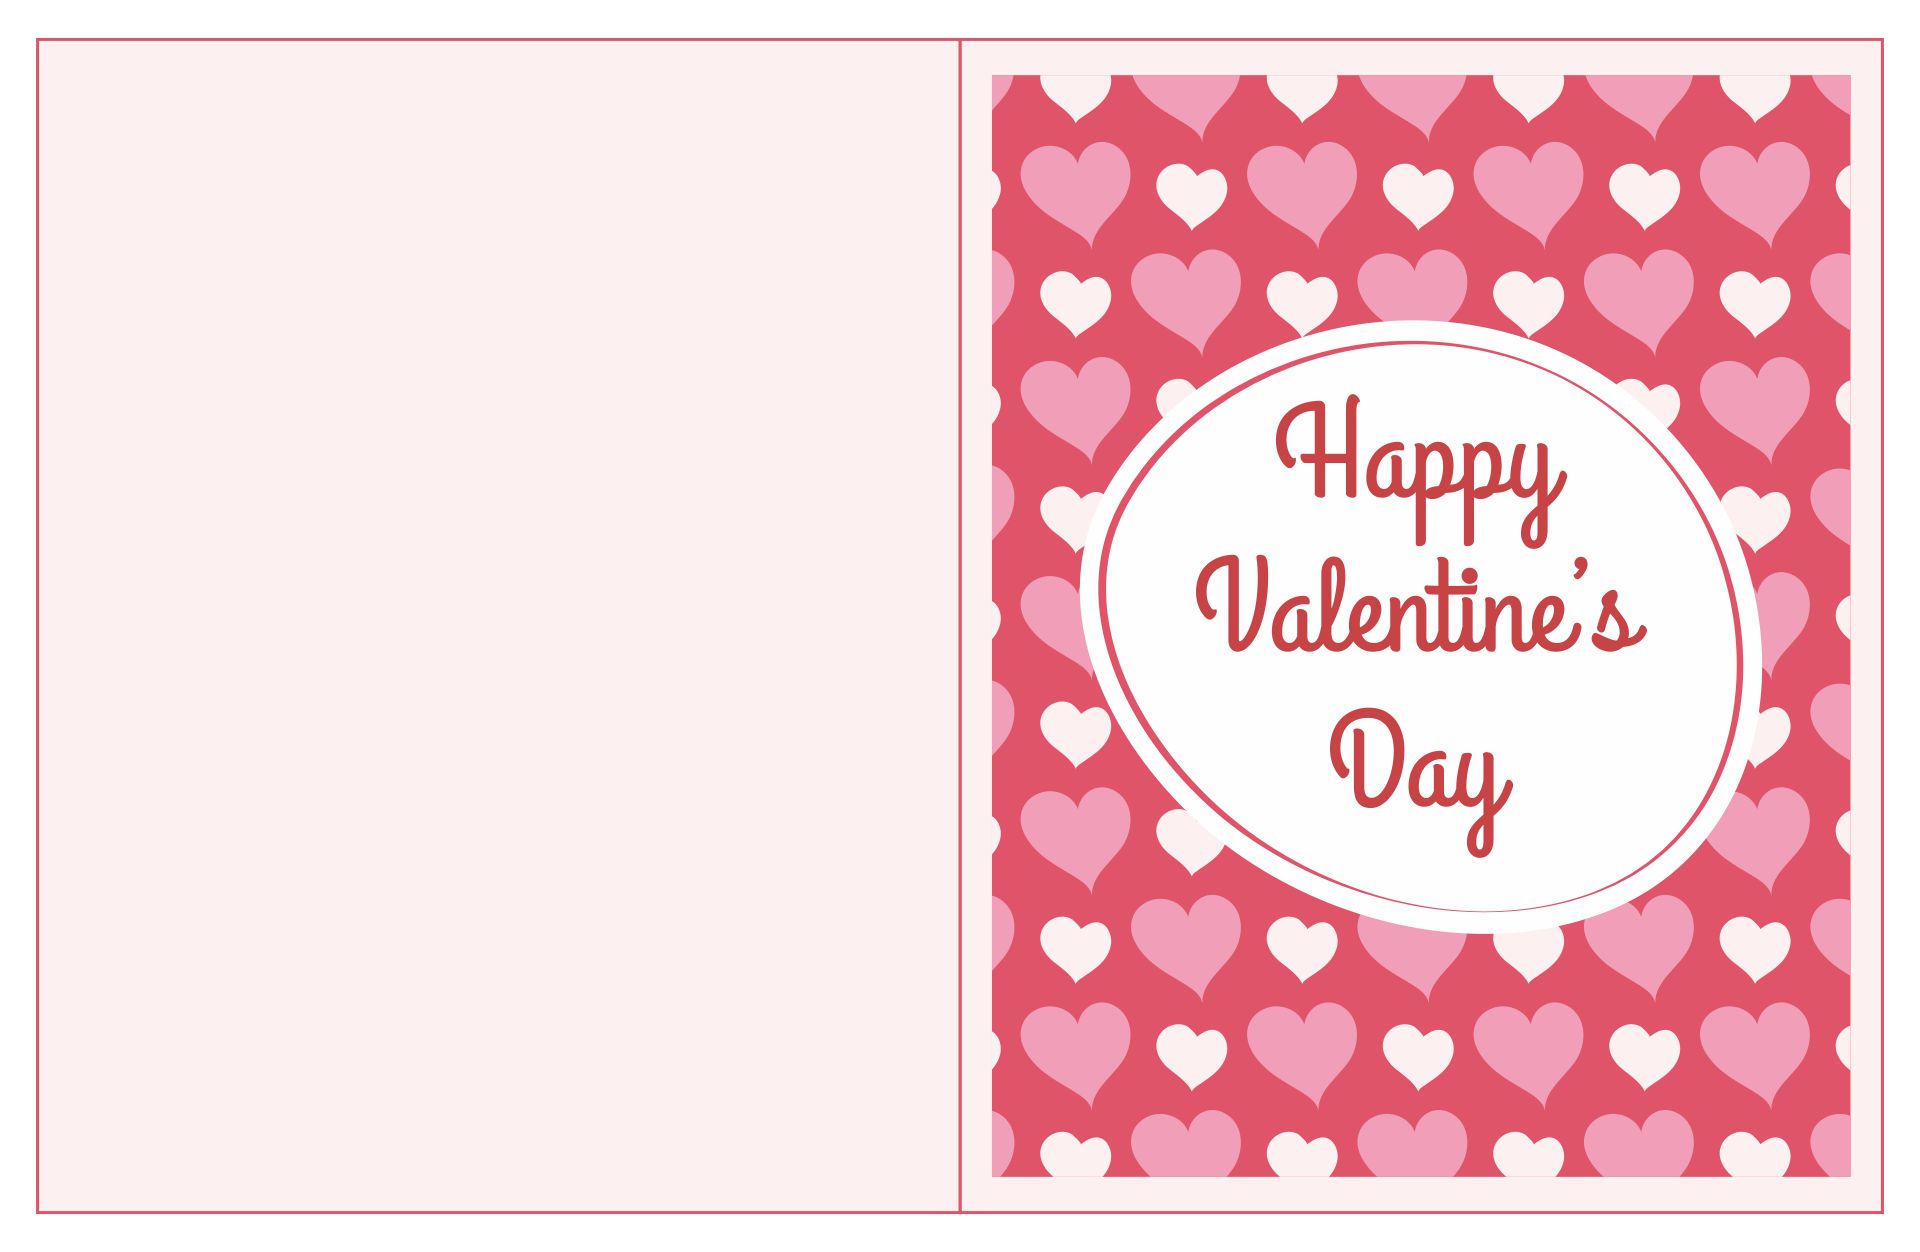 9 Best Images of My Valentine Free Printable Cards Free Printable